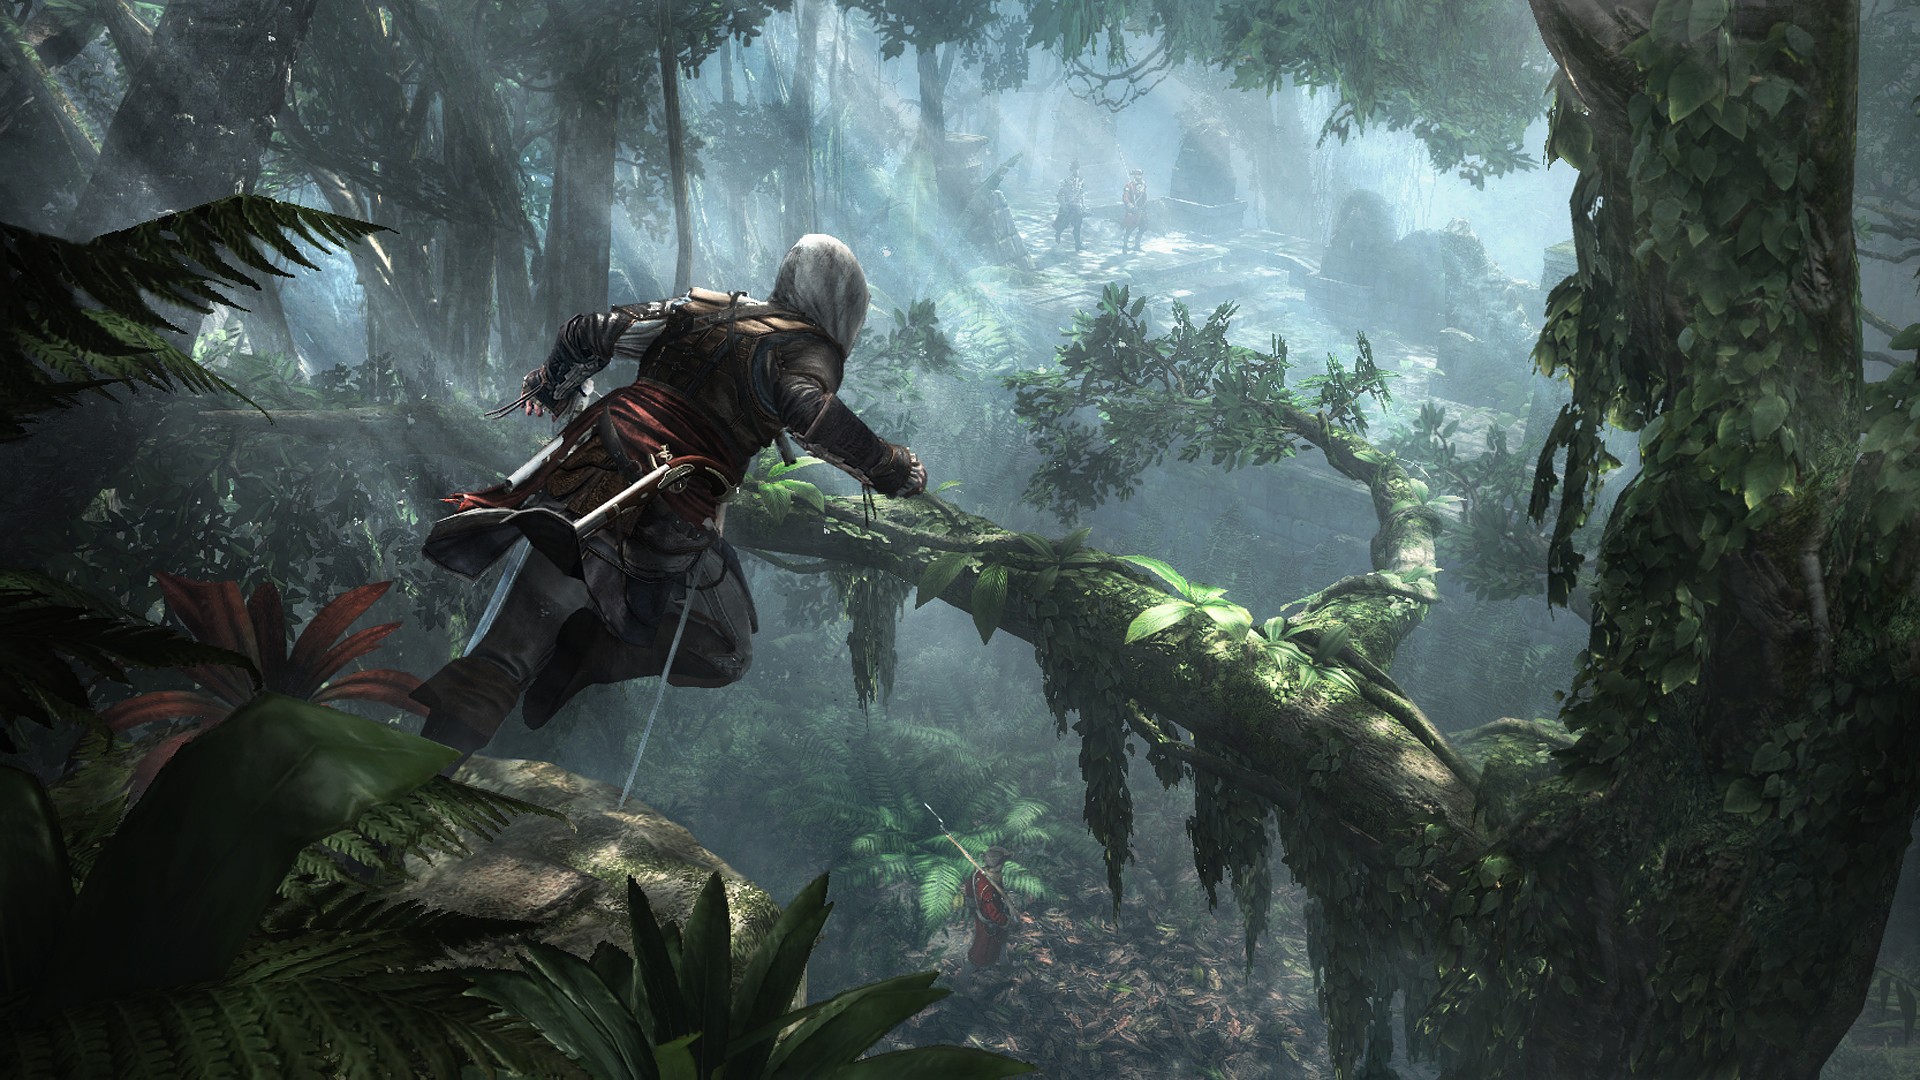 Assassin's Creed IV: Black Flag, Ubisoft, Xbox One, [Physical], 53811 